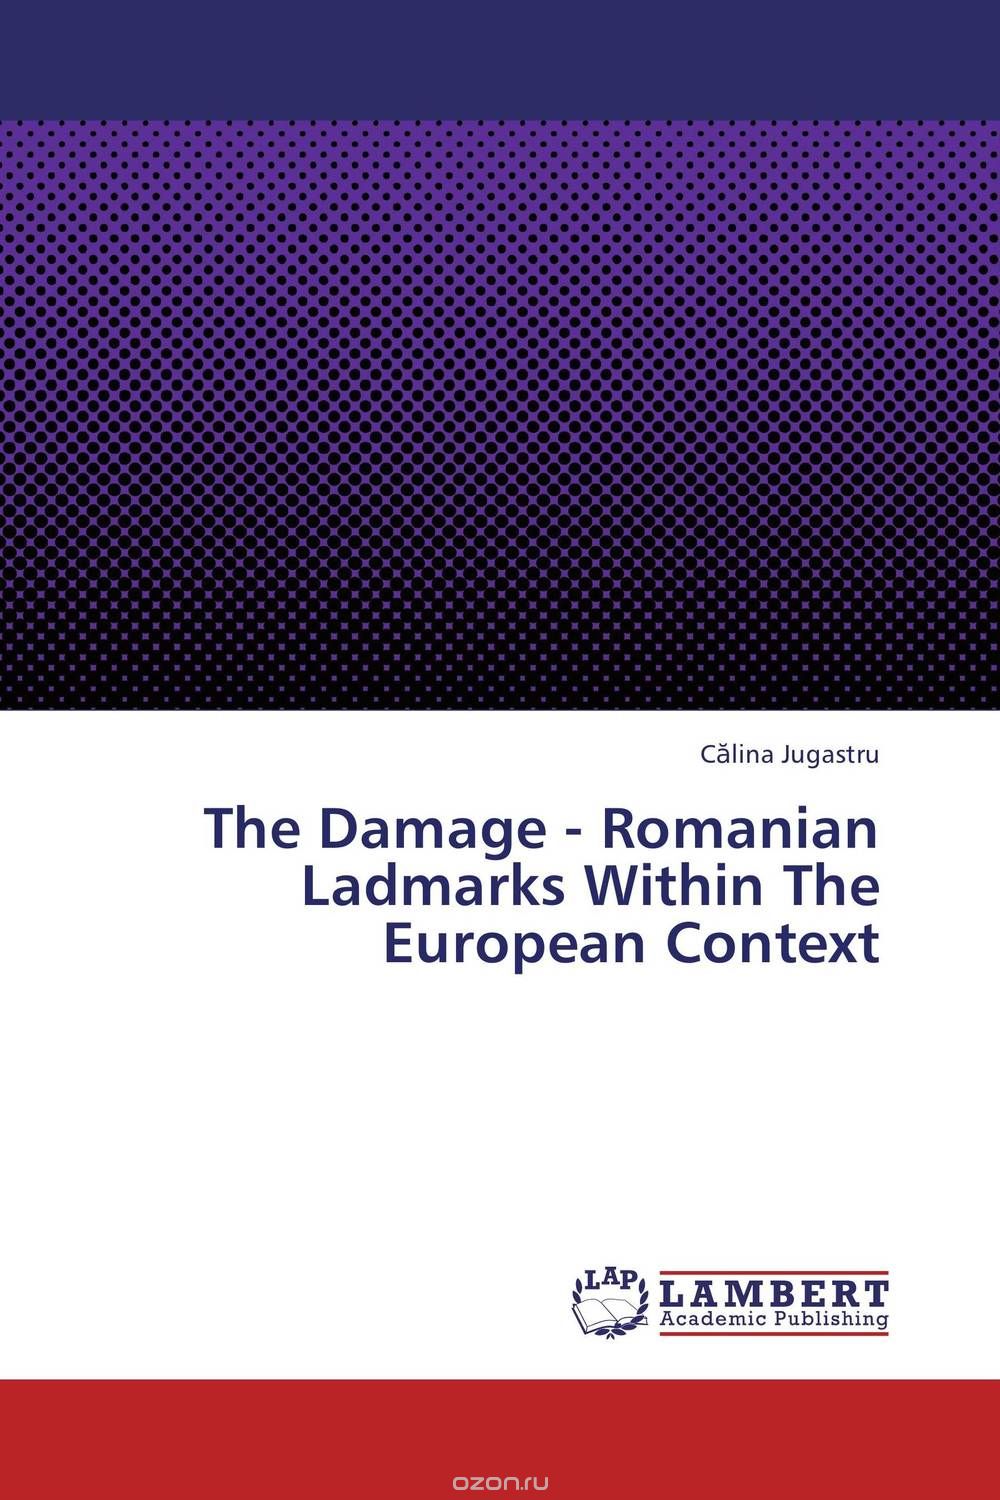 Скачать книгу "The Damage - Romanian Ladmarks Within The European Context"